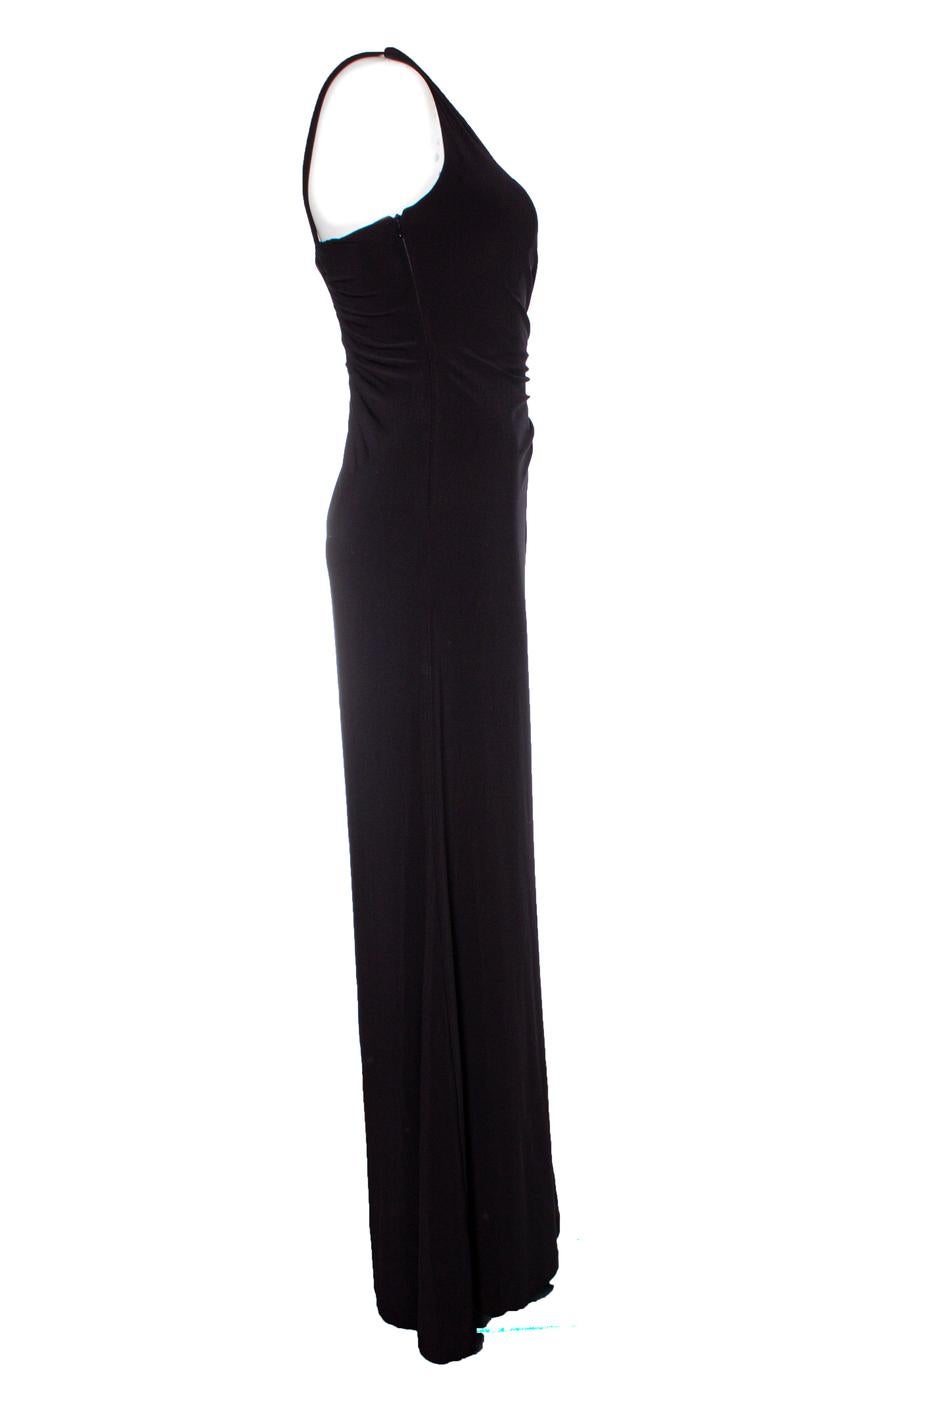 Women's Blumarine Blugirl, Black evening gown For Sale